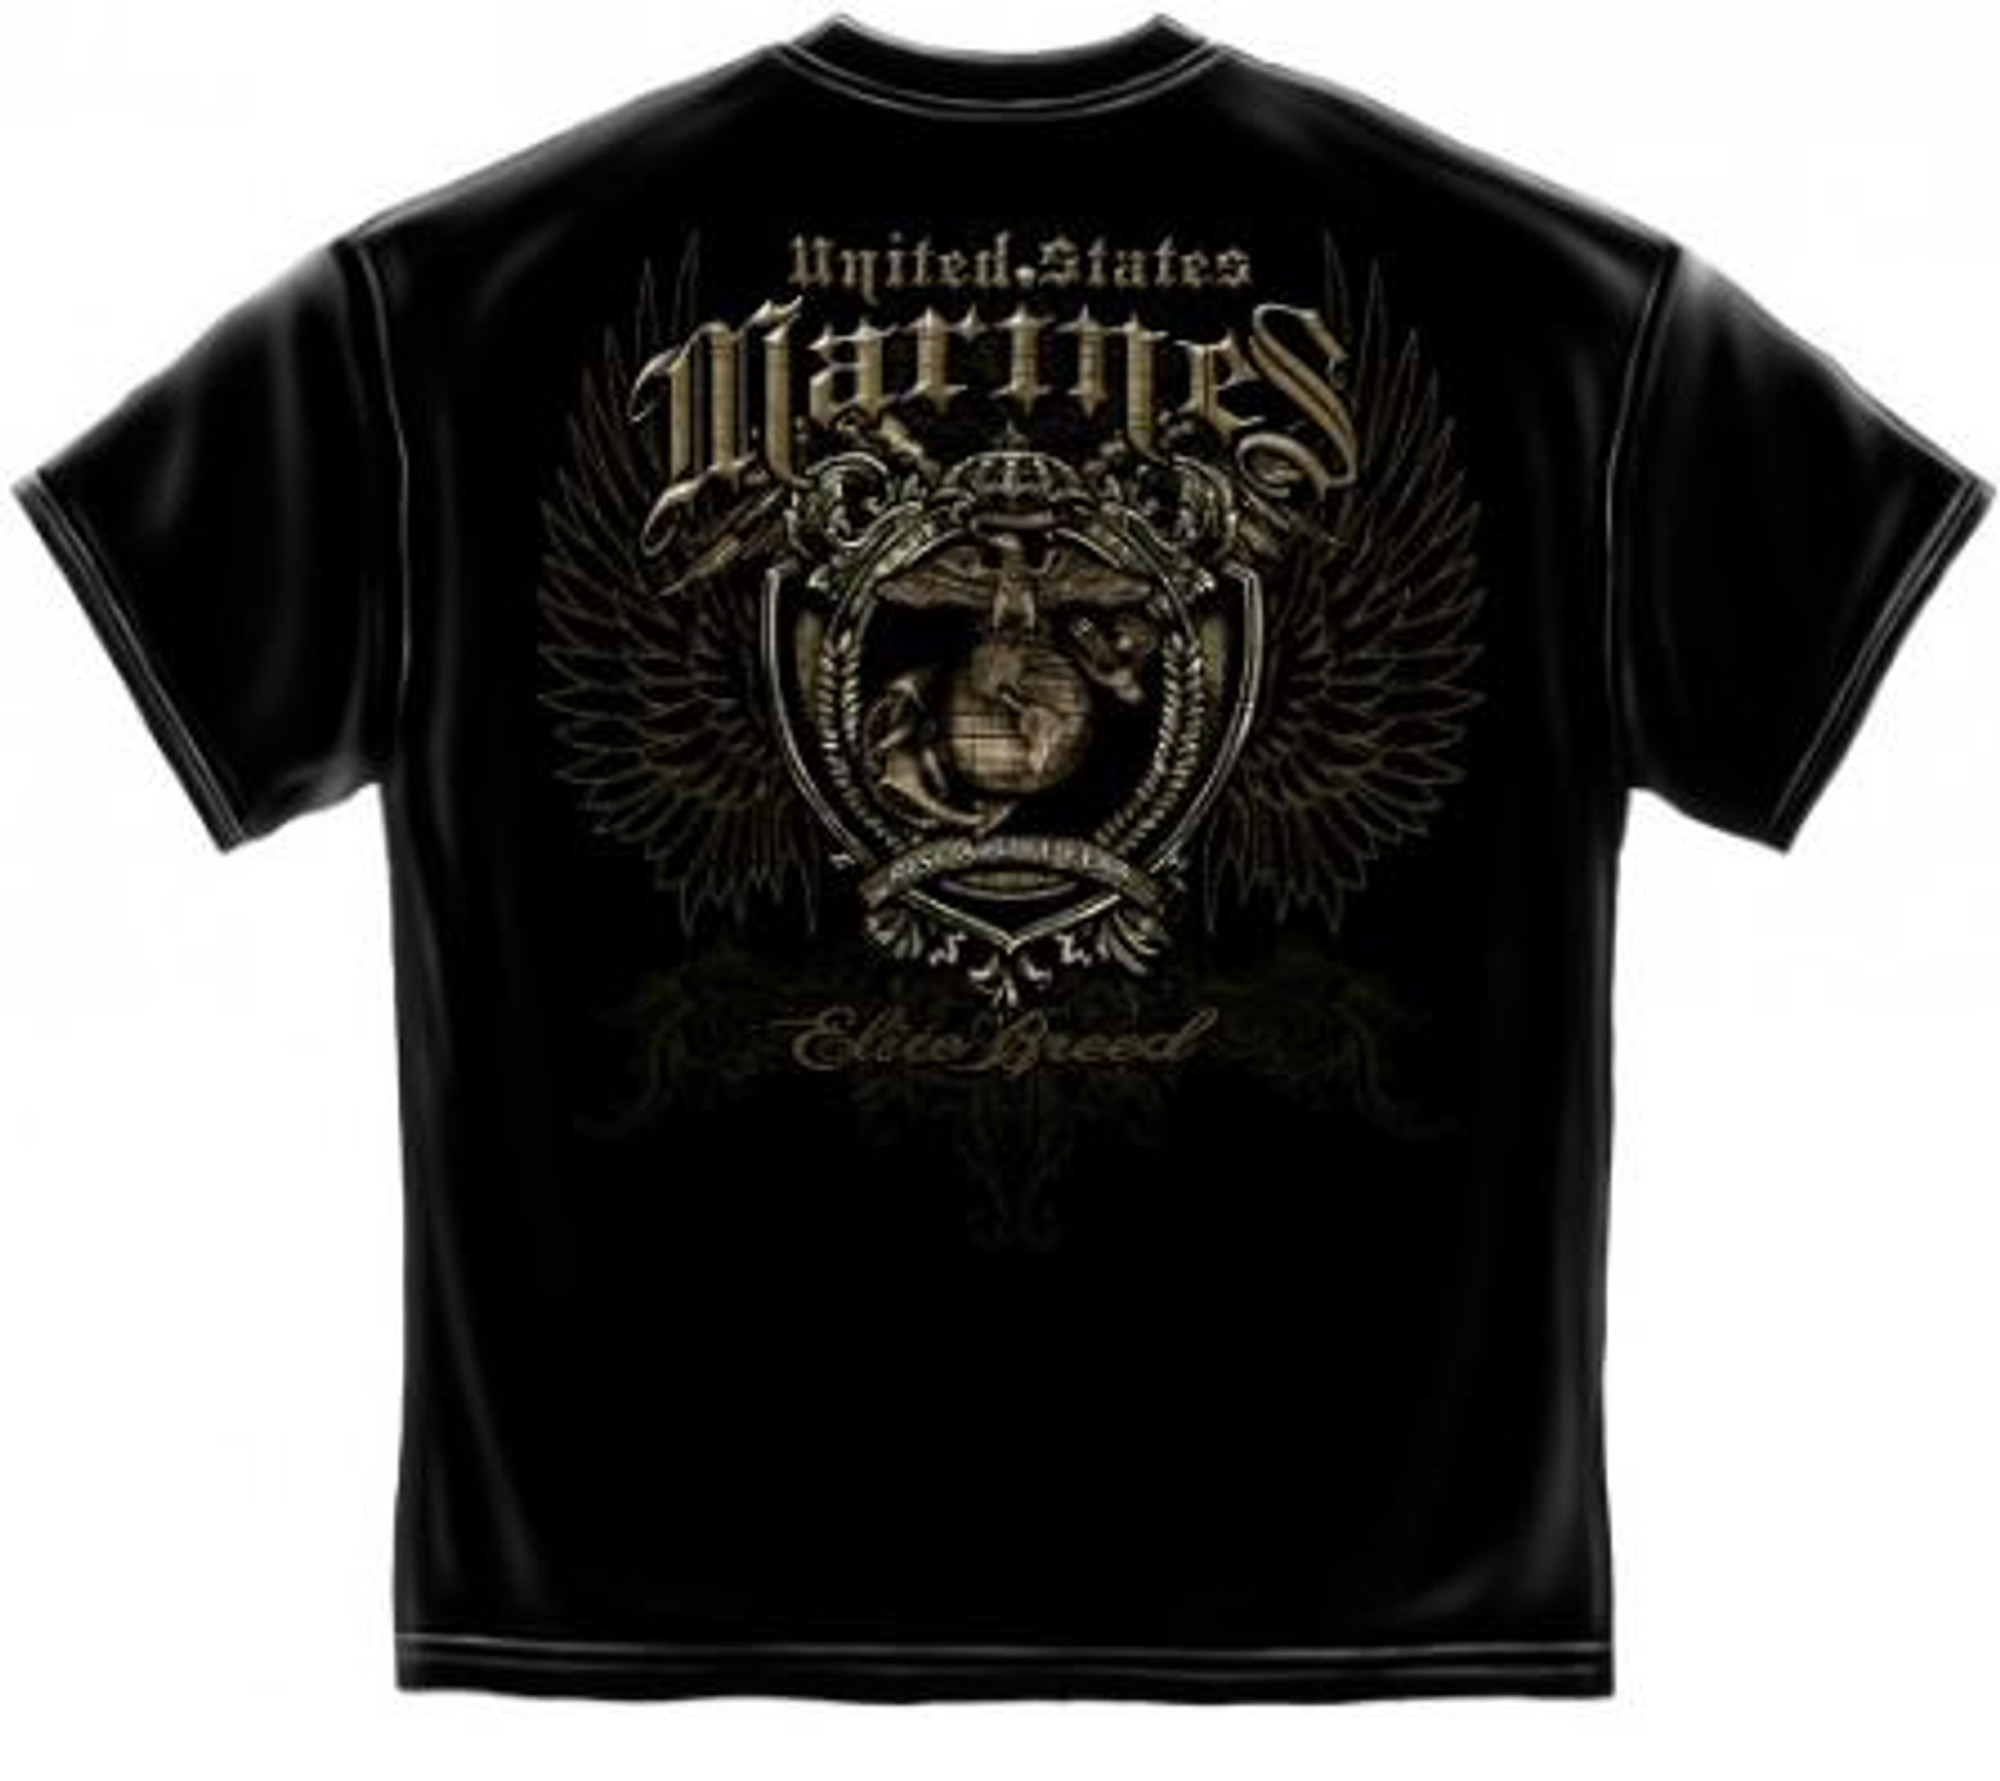 USMC "Marine Crest" T-Shirt